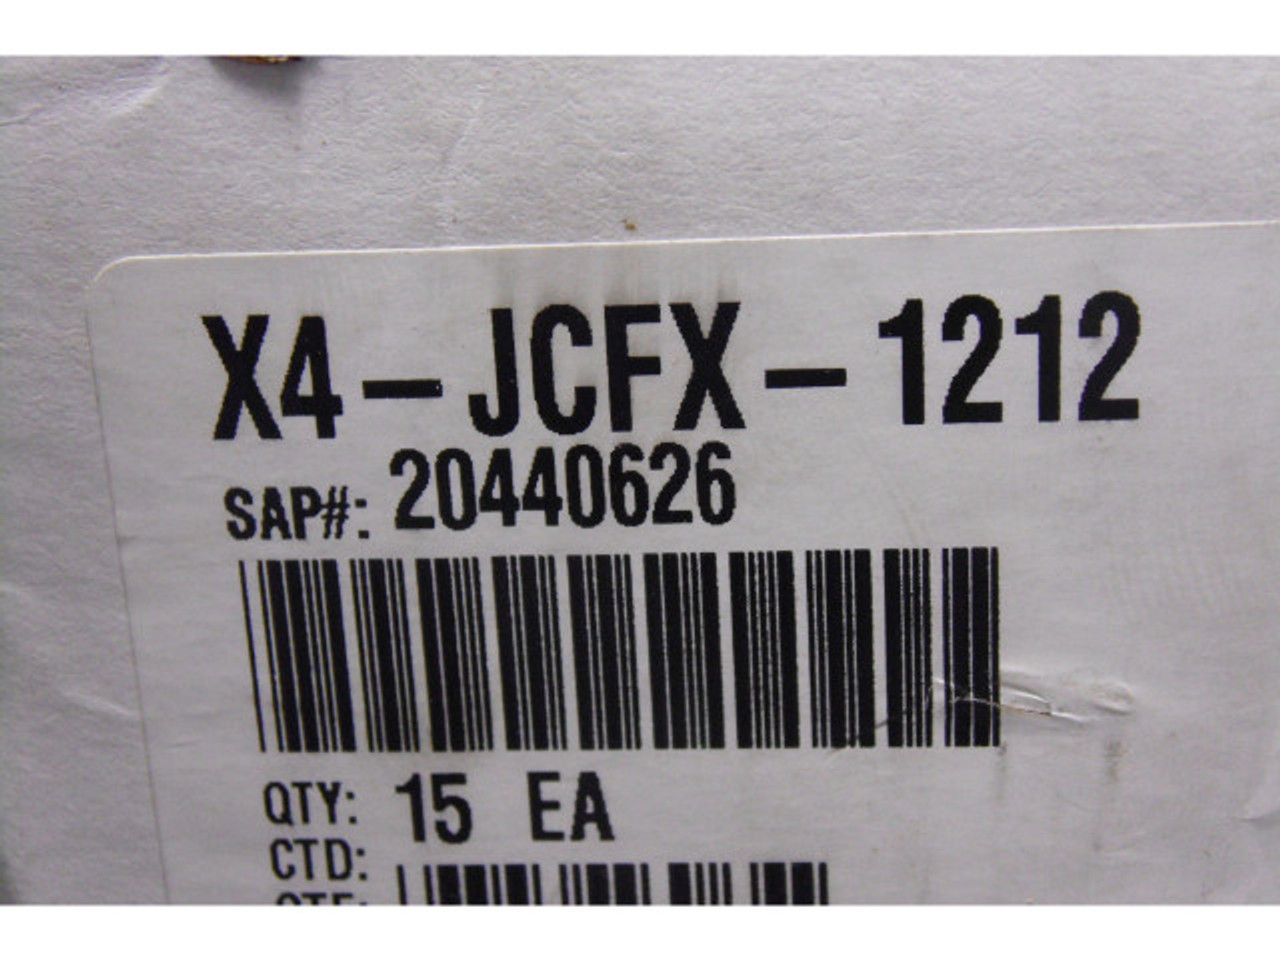 Goodyear X4-JCFX-1212 Female Hydraulic Hose Fitting 15 Pack ! NEW !